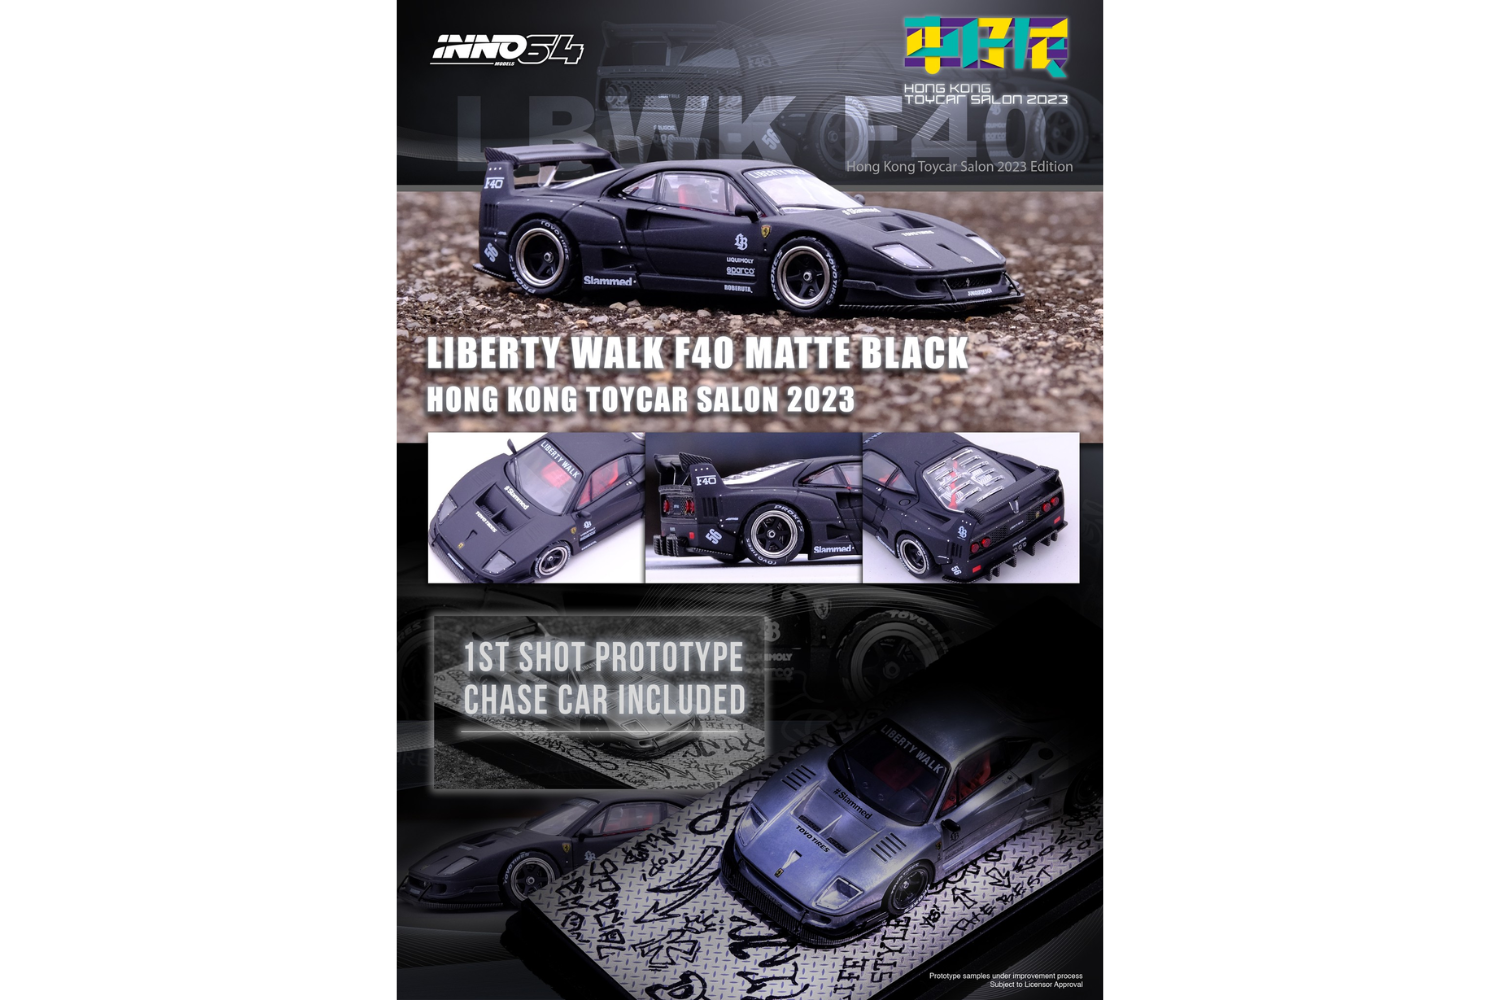 Inno64 LBWK Ferrari F40 in Matte Black - Hong Kong Toy Car Salon 2023